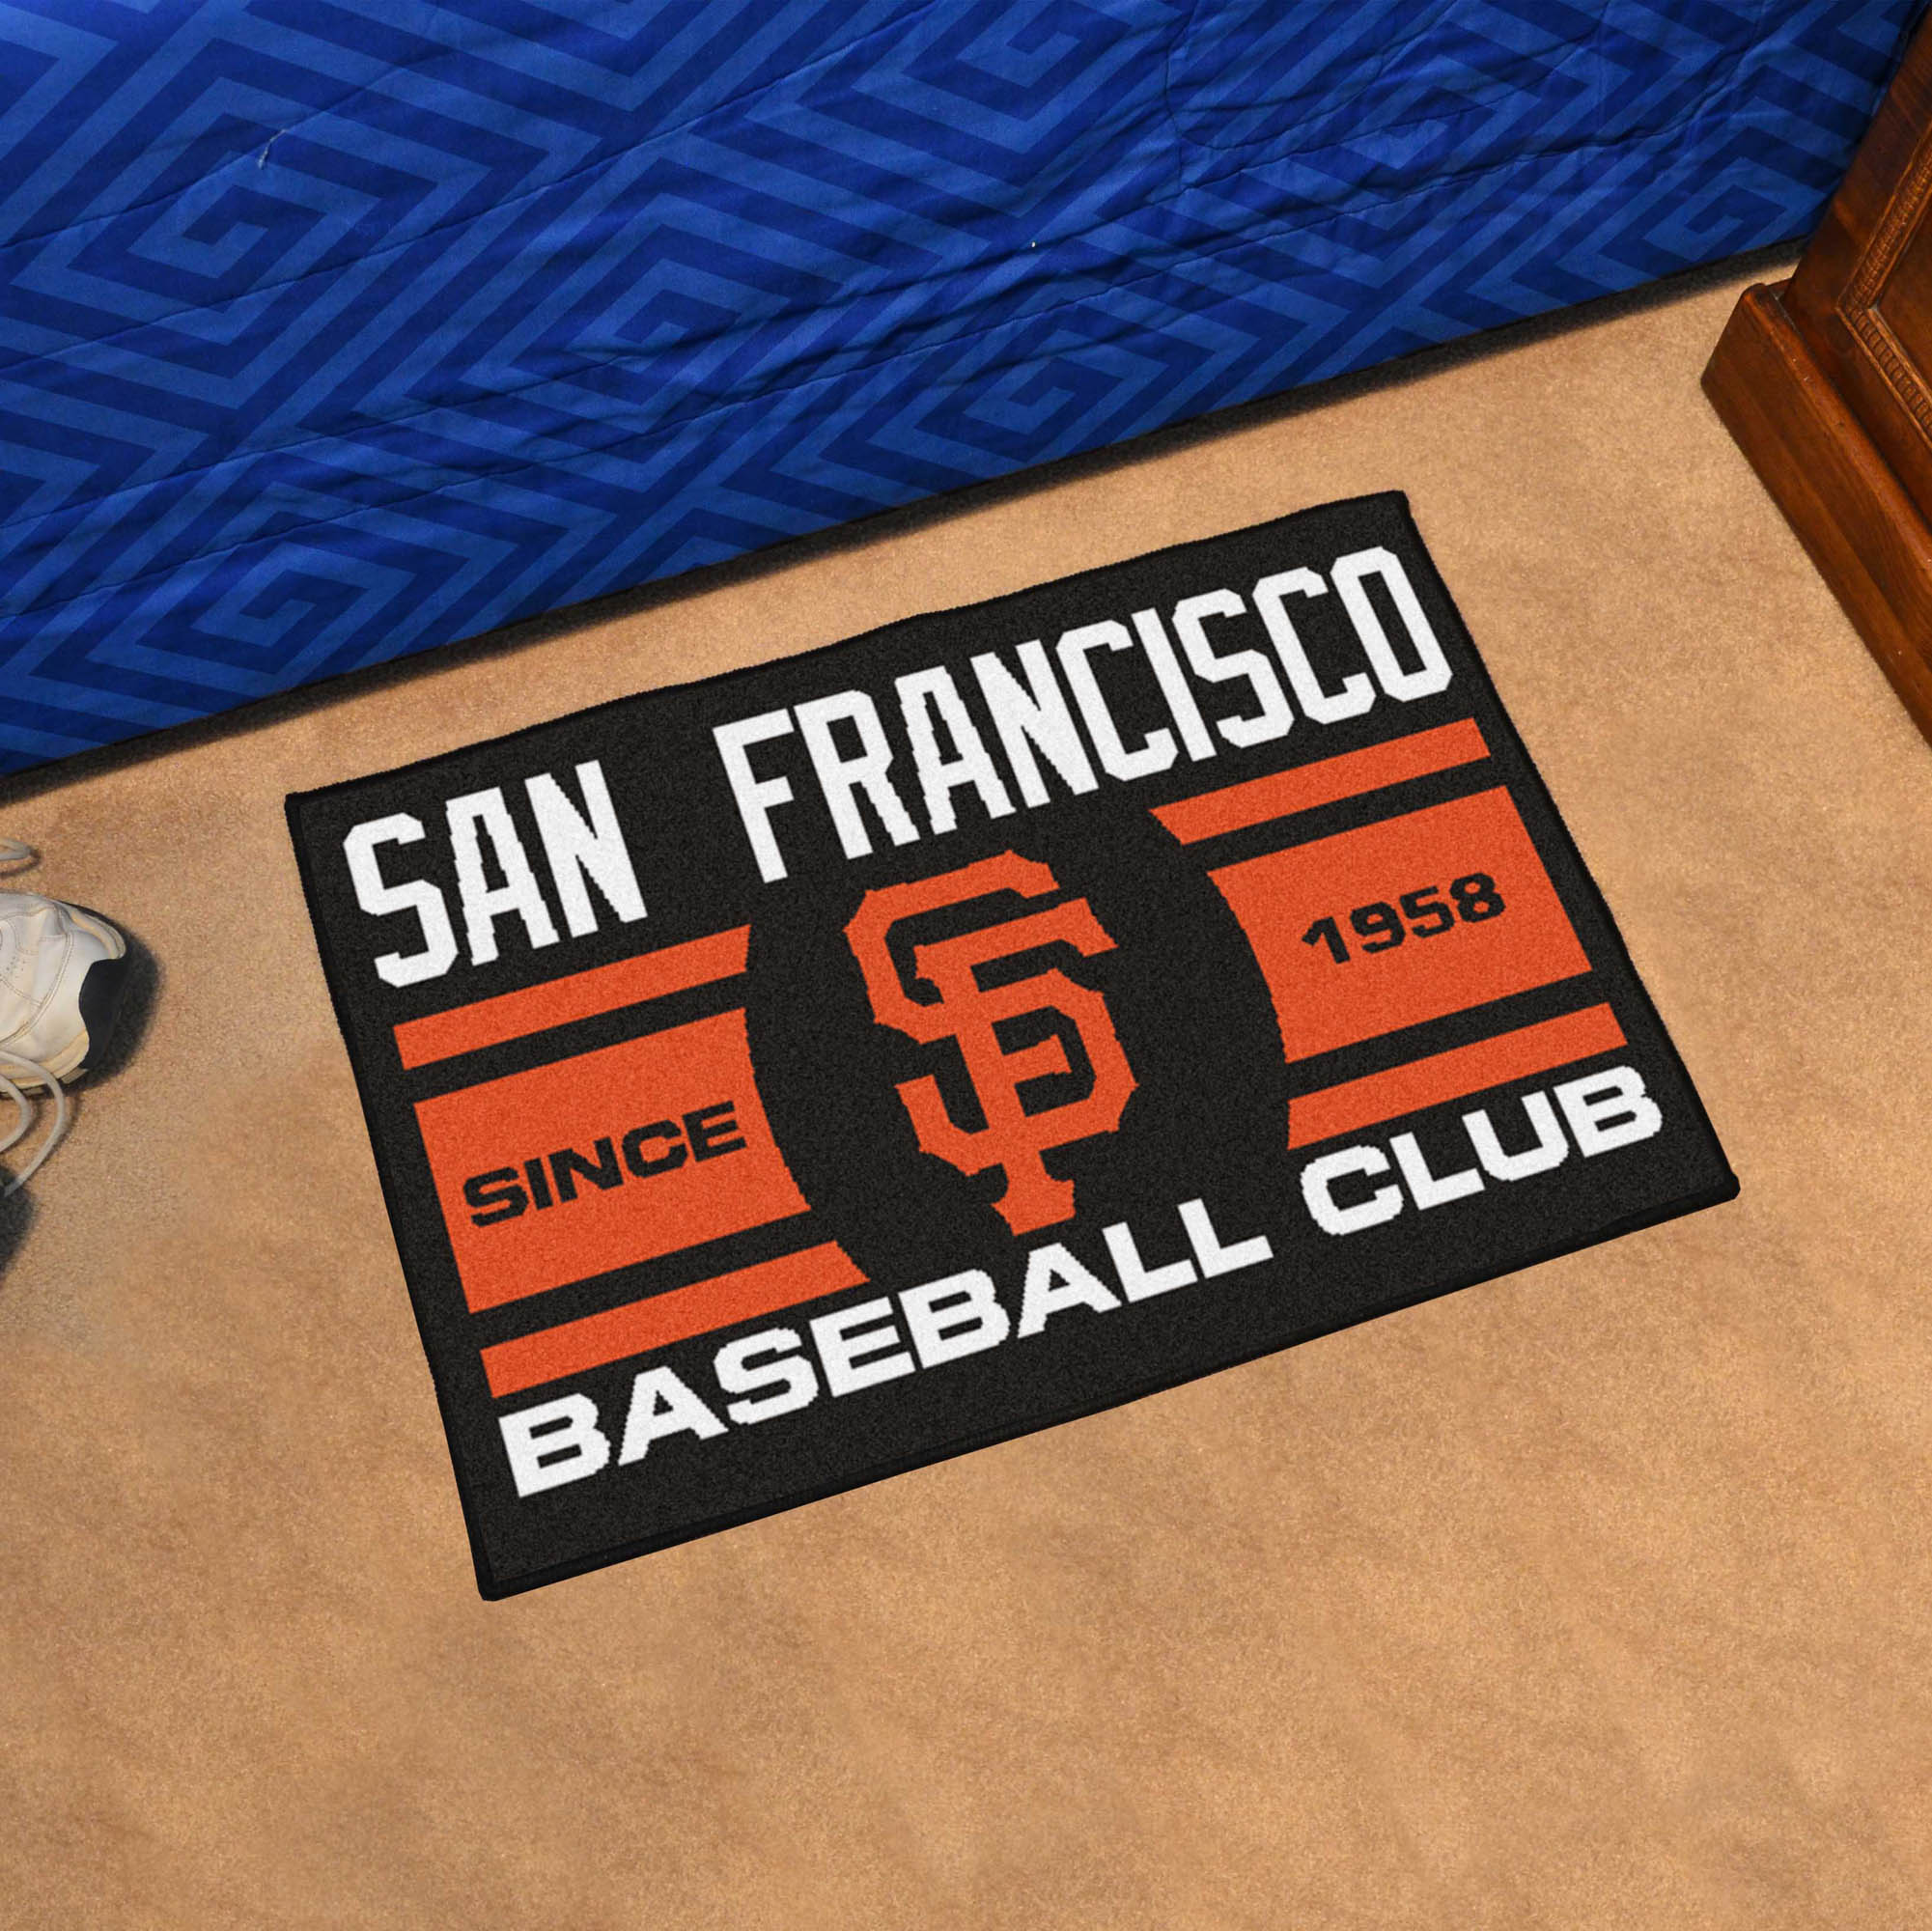 San Francisco Giants Baseball Club Doormat â€“ 19 x 30